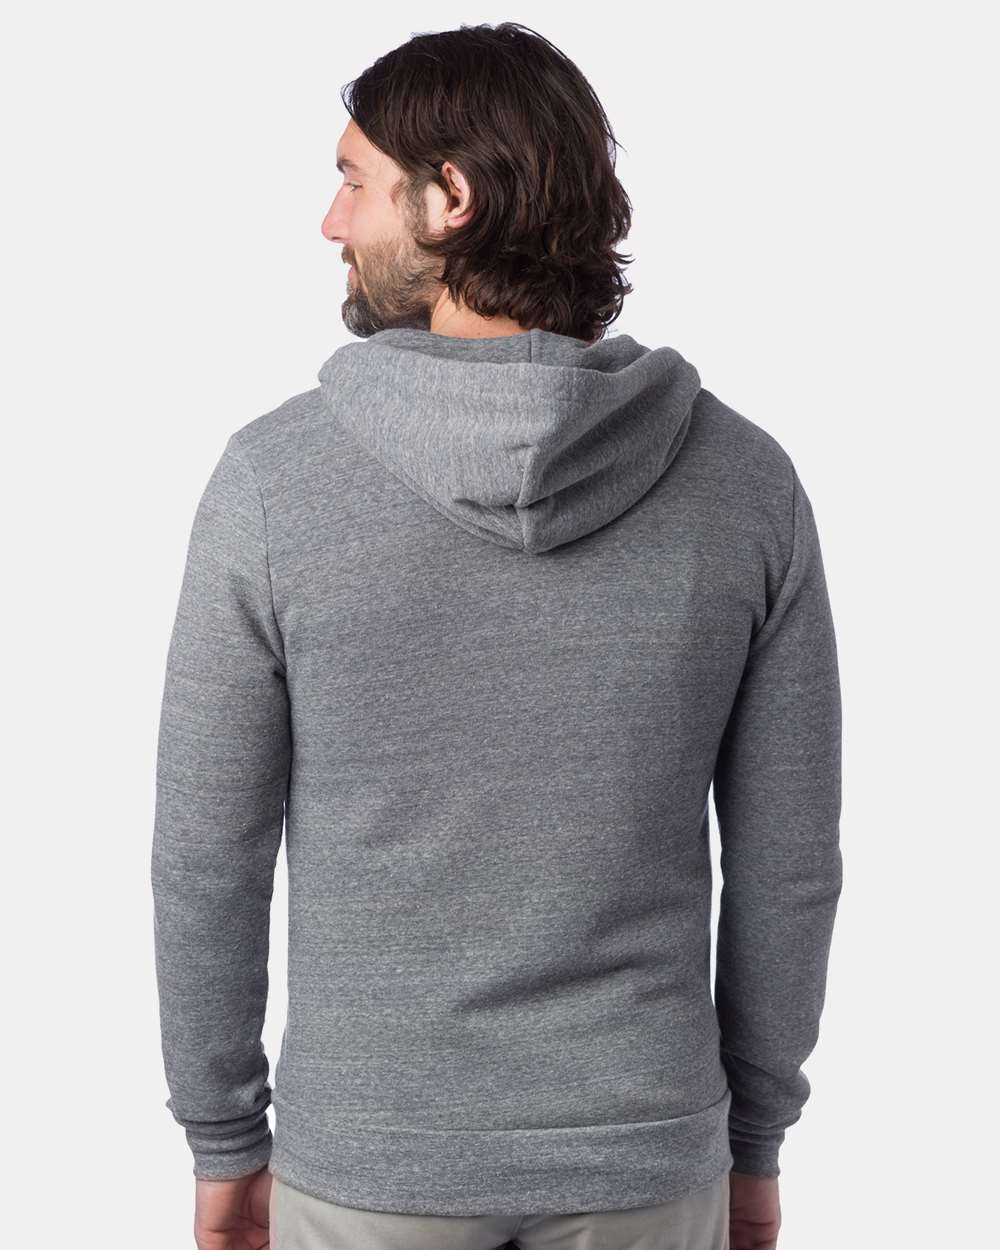 Alternative Rocky Eco-Fleece Full-Zip Hooded Sweatshirt 9590 #colormdl_Eco Grey